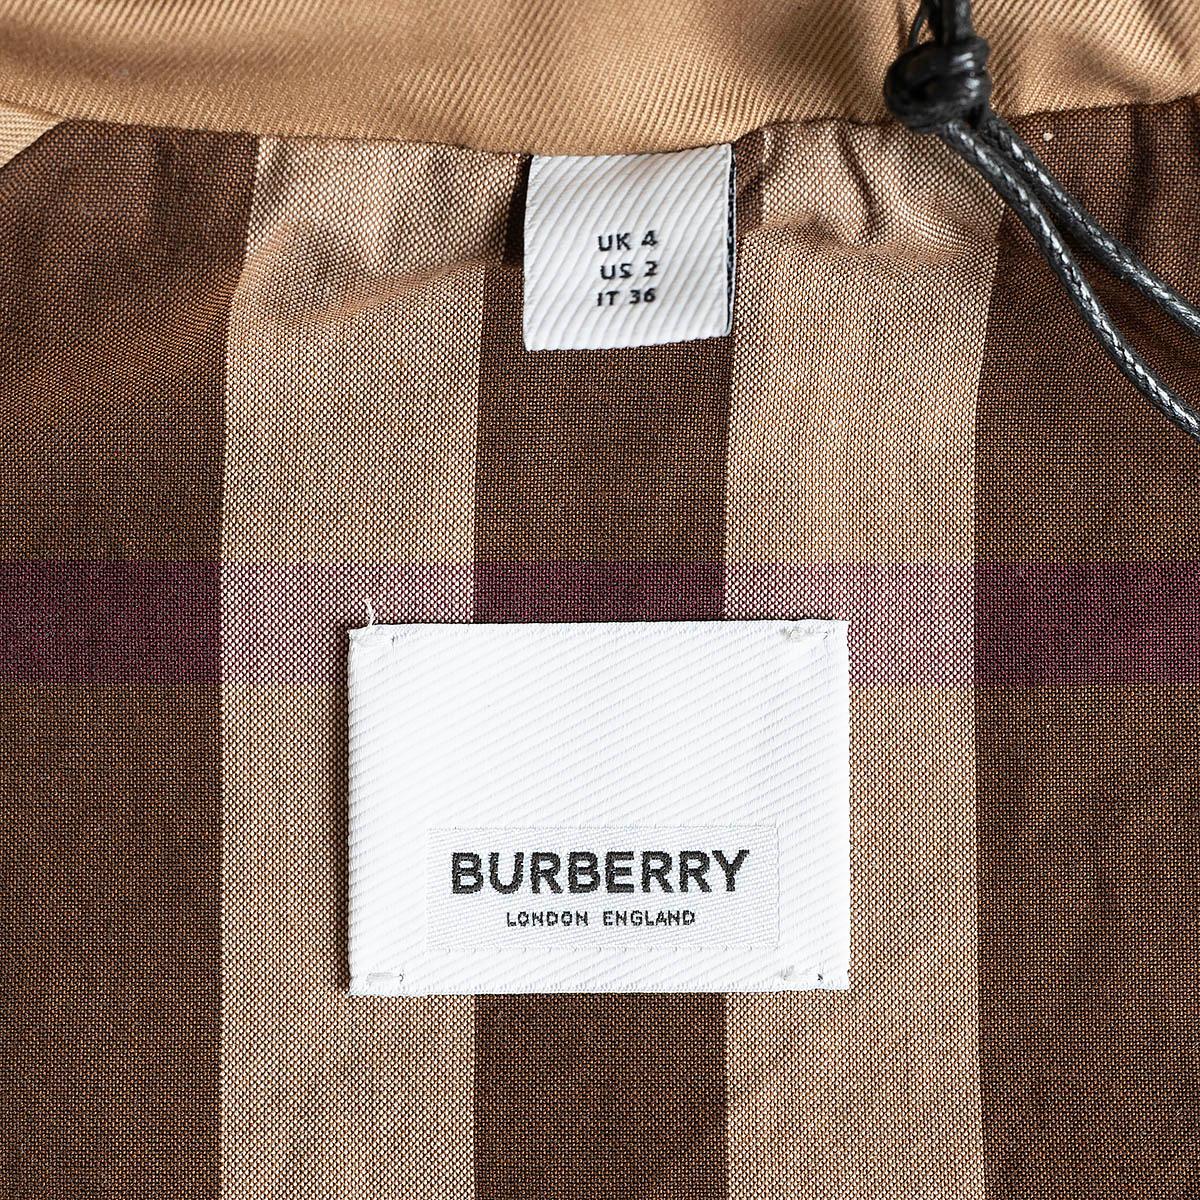 BURBERRY beige cotton THE LONG WATERLOO HERITAGE TRENCH Coat Jacket 4 XXS 3